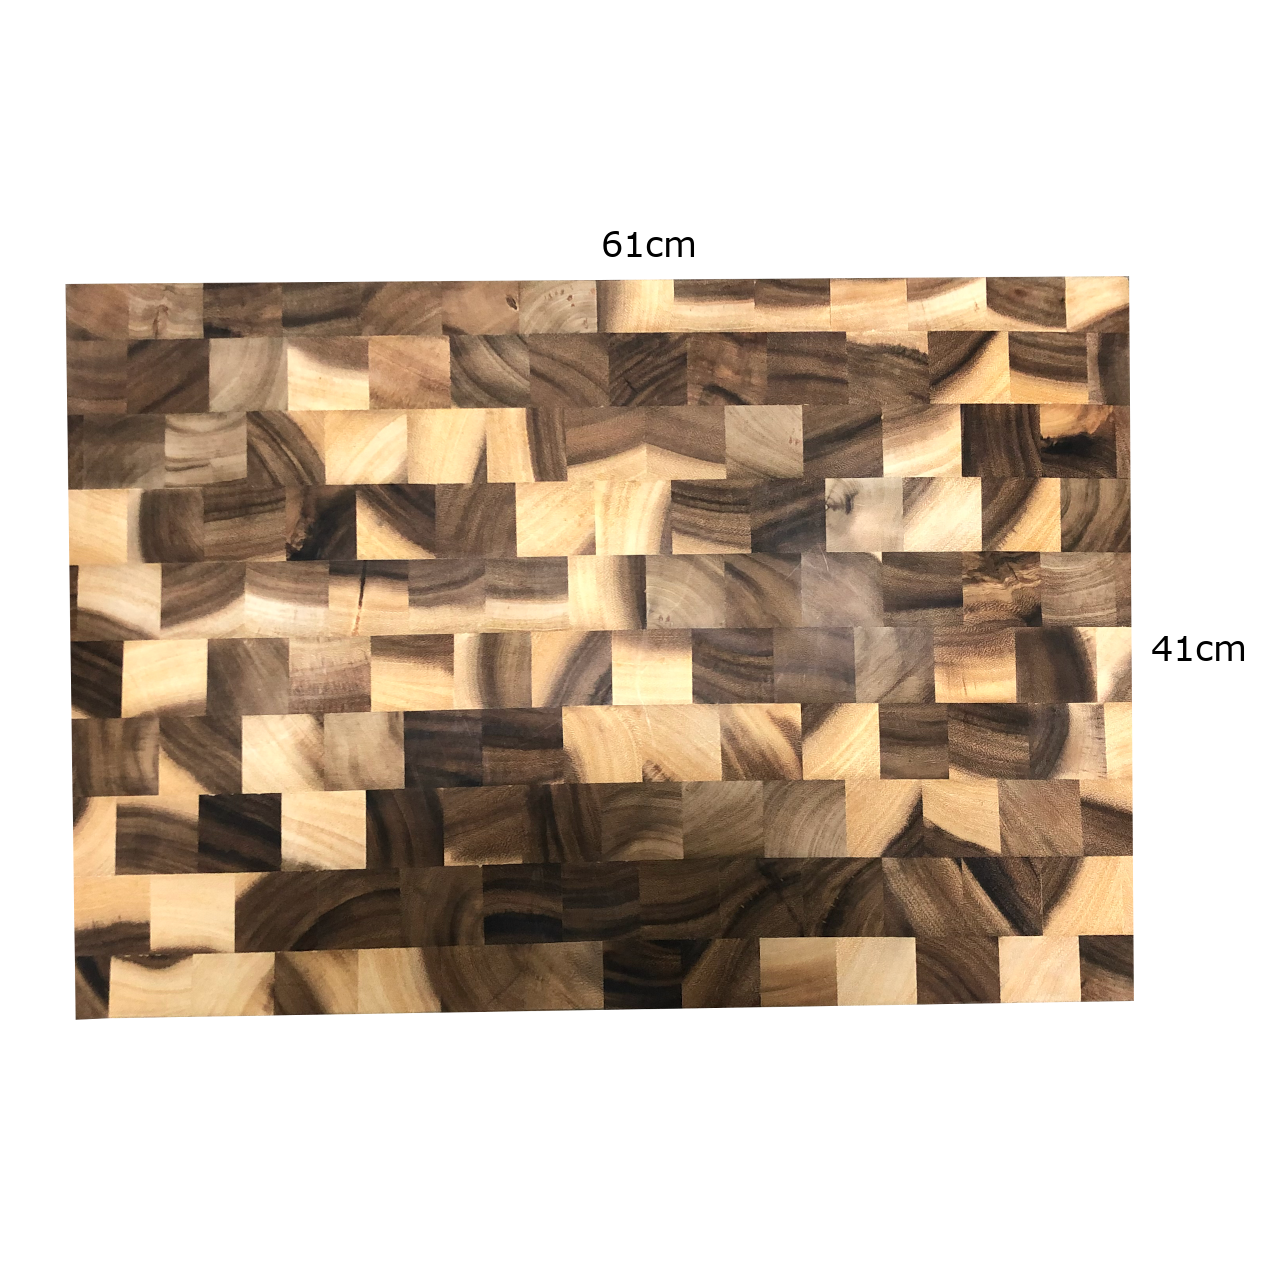 End Grain Acacia Wood Cutting Board